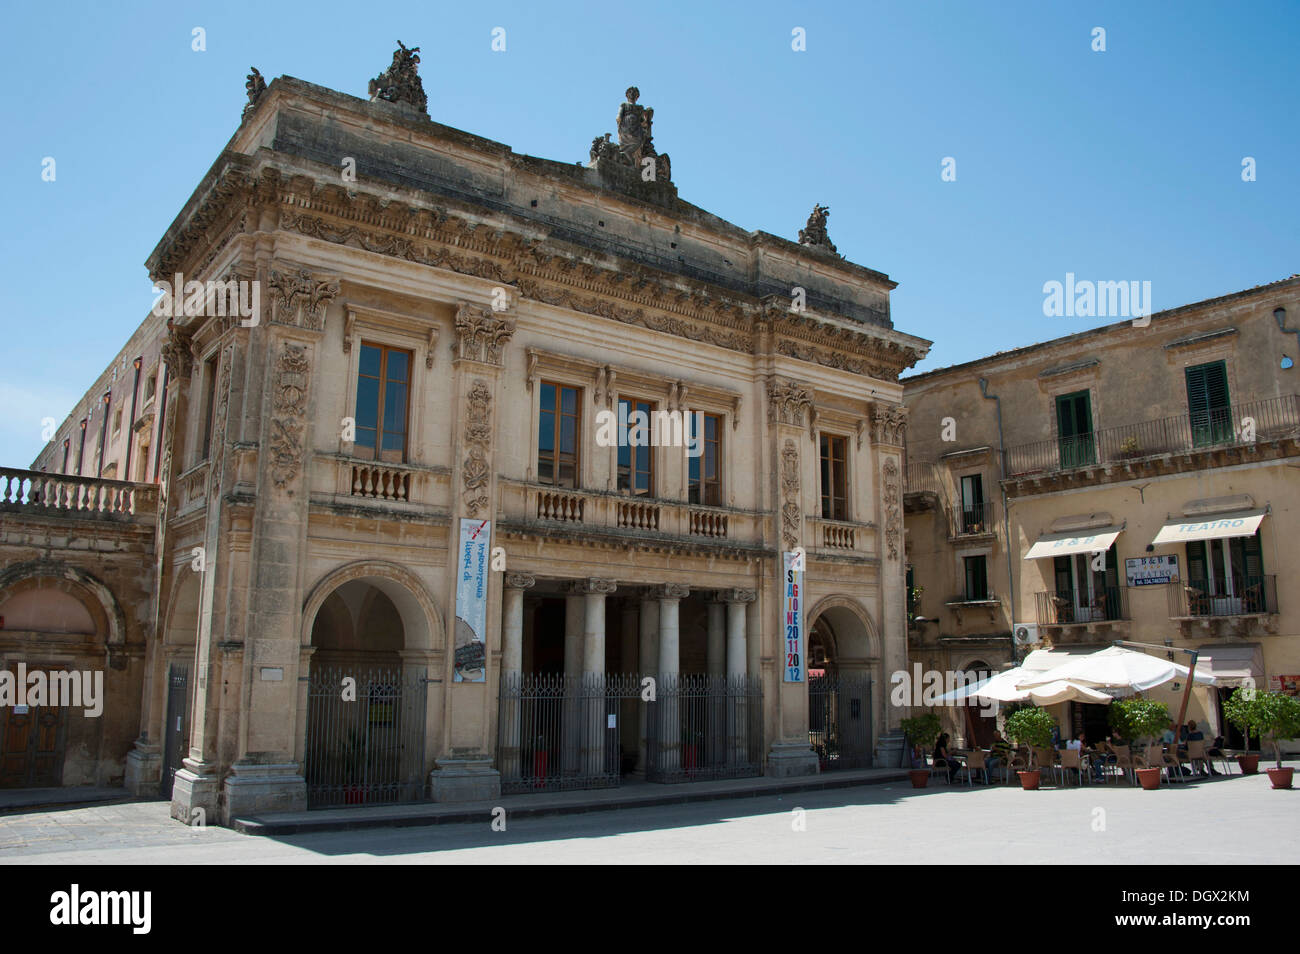 Theatre on Piazza XVI Maggio square, Noto, province of Syracuse, Sicily, Italy, Europe Stock Photo